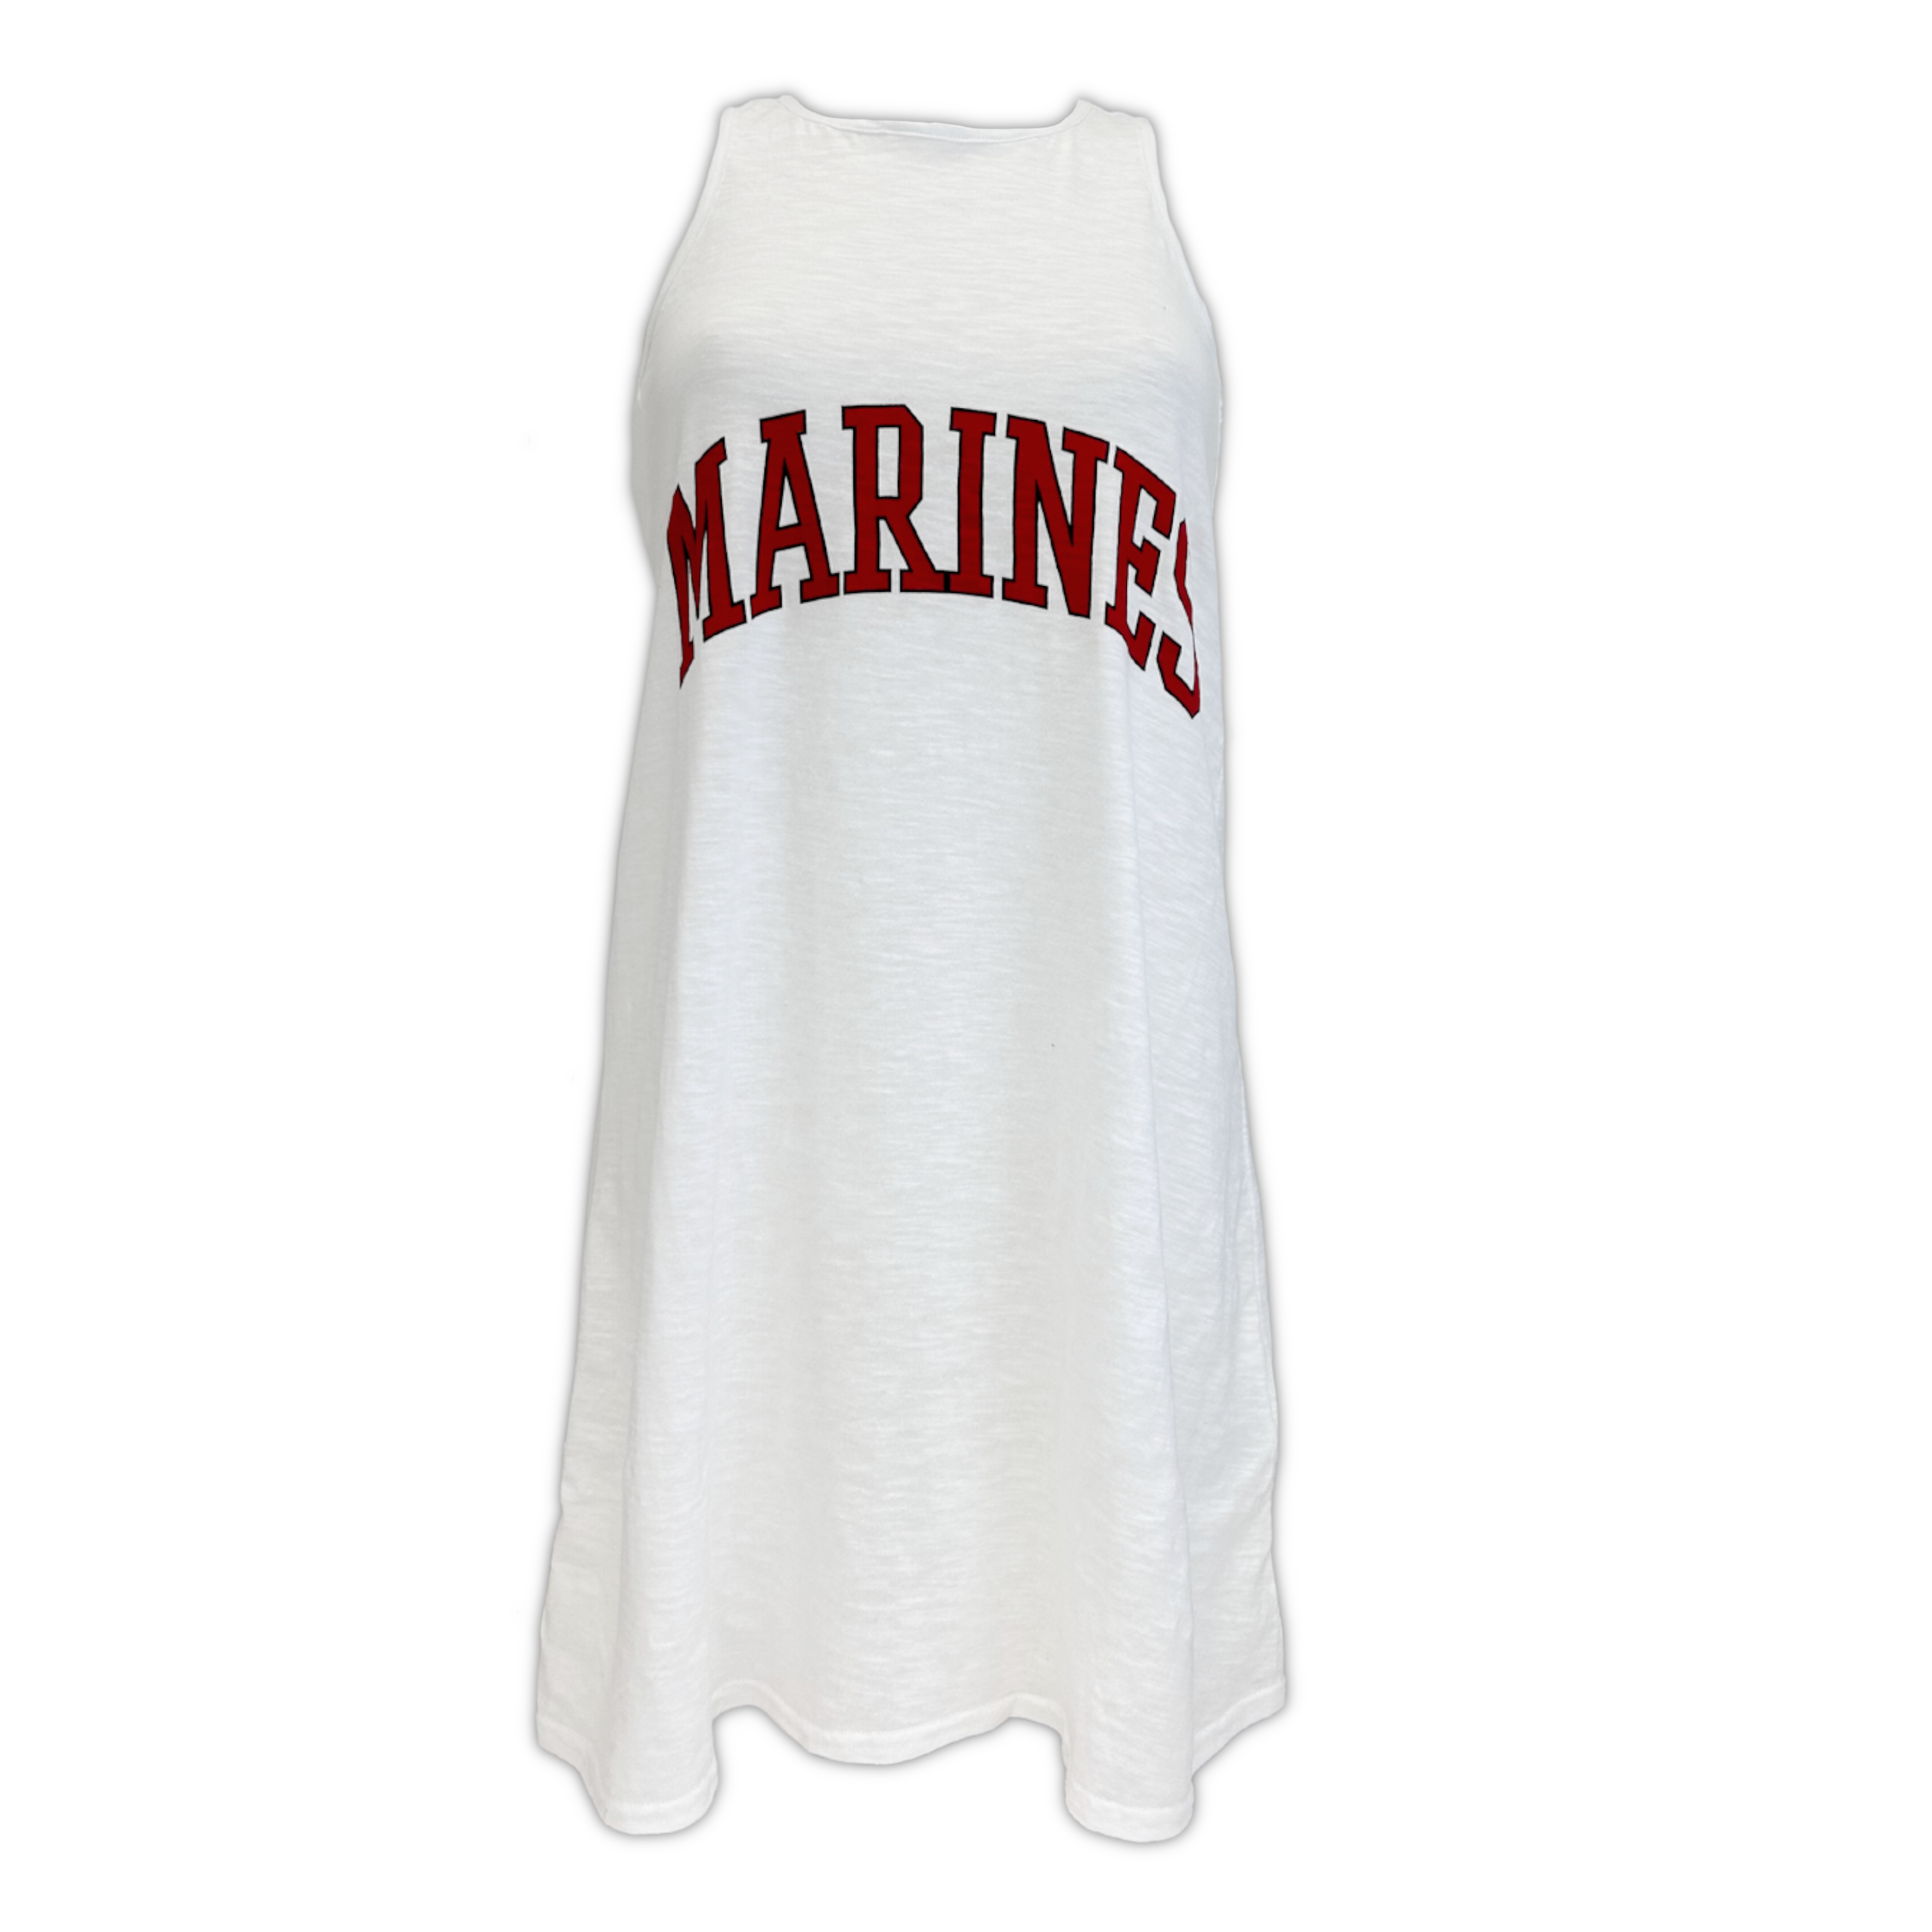 Marines Ladies Coastal Cover Up (White)